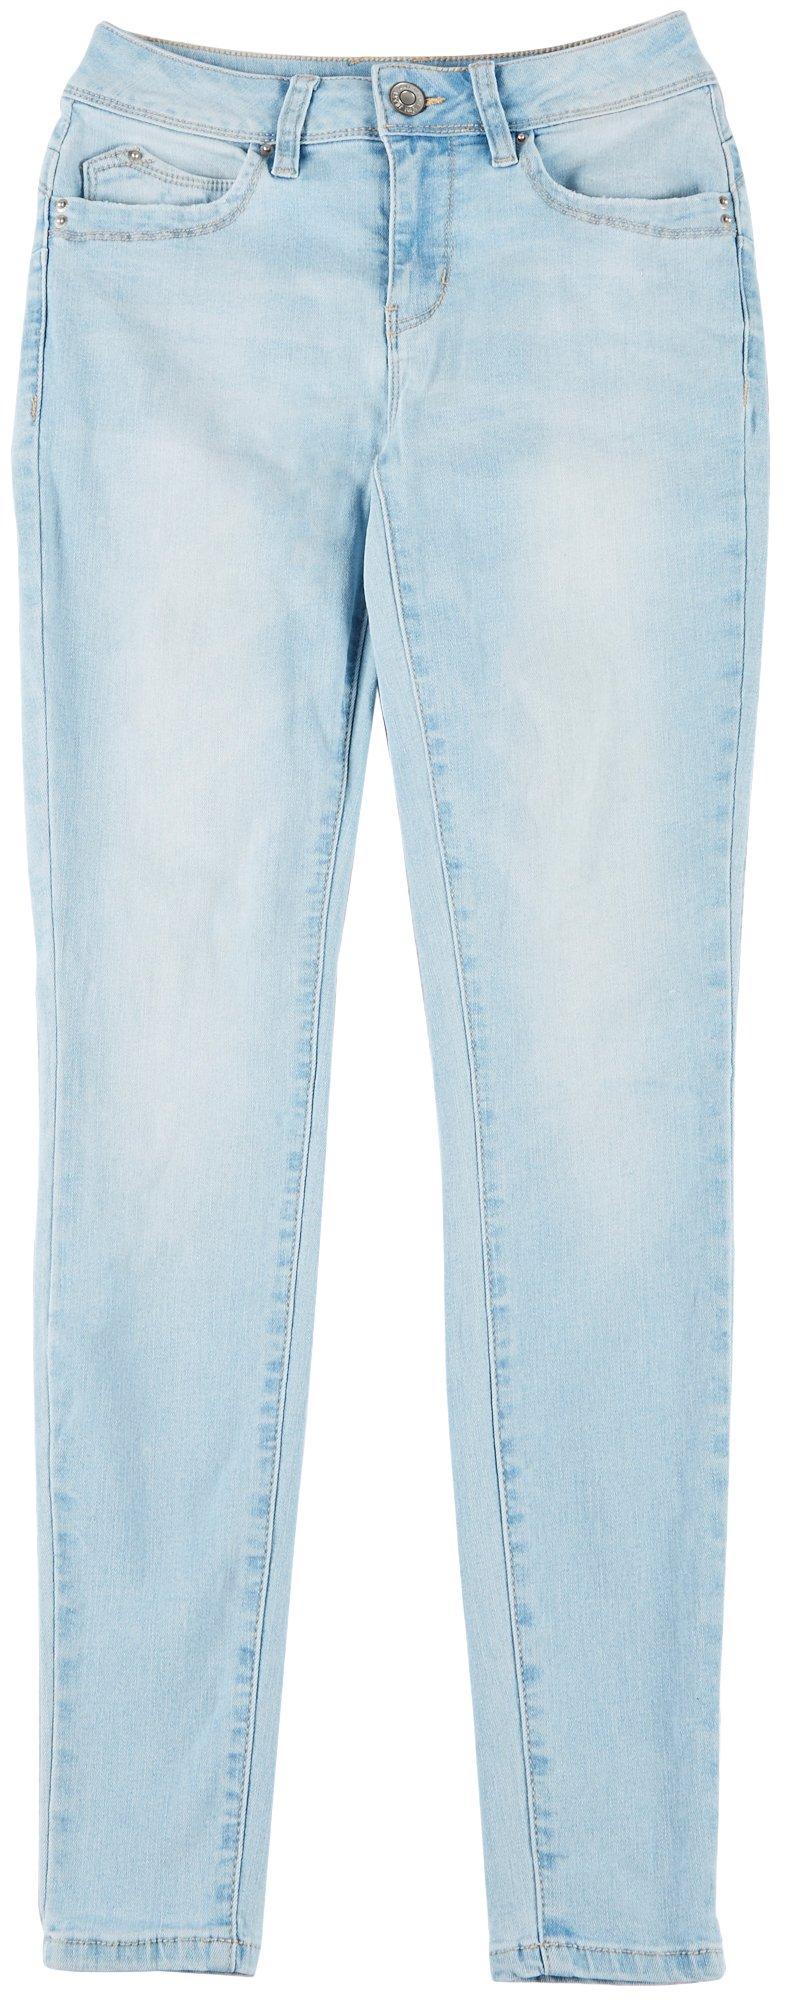 super skinny jeans womens sale